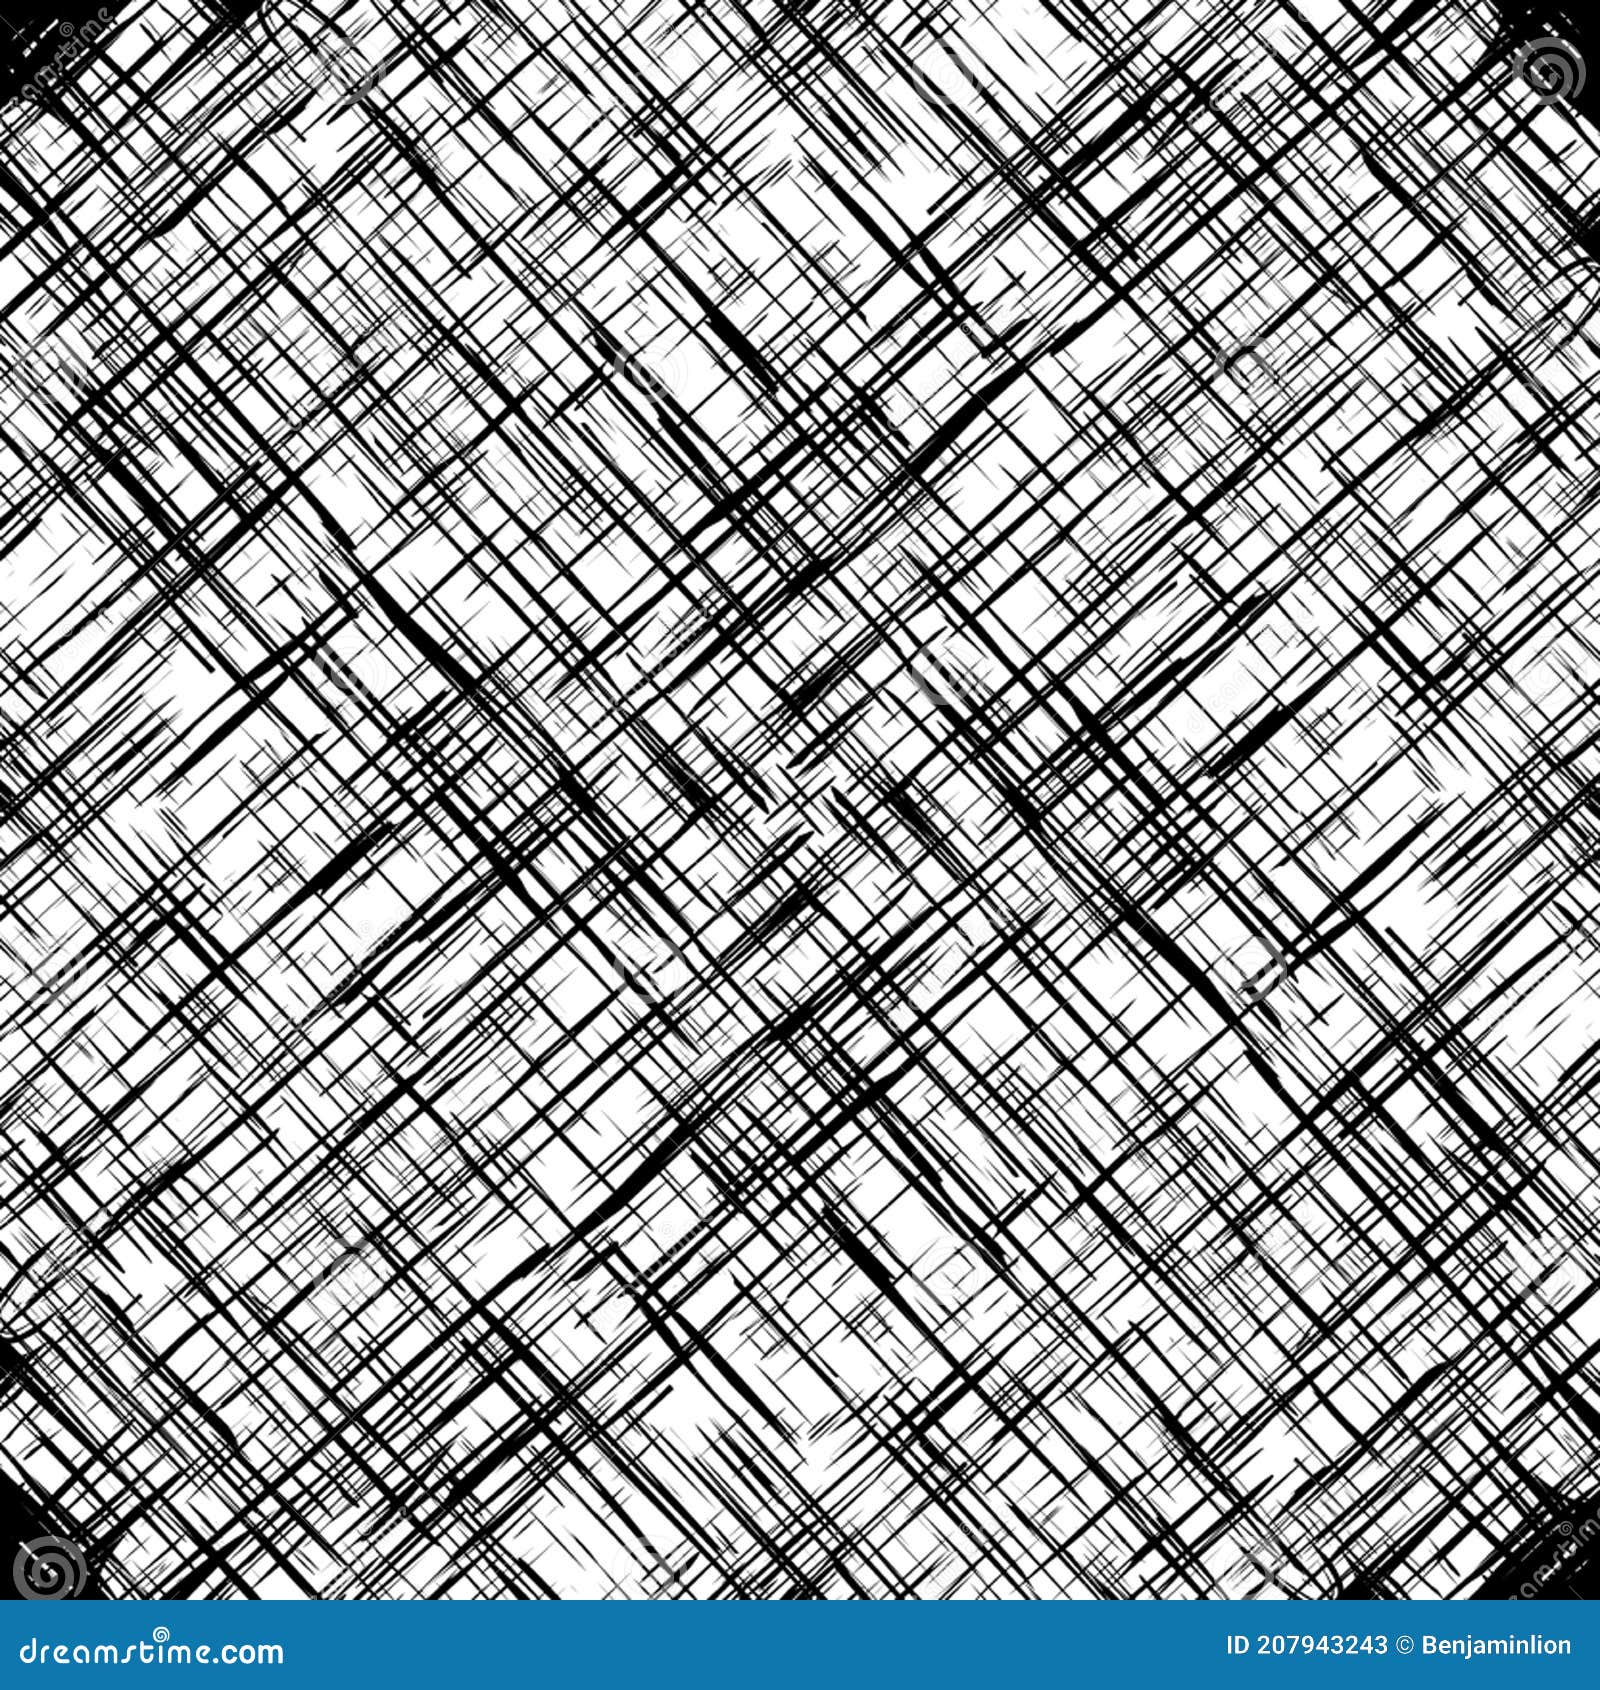 Distress Vector Texture stock illustration. Illustration of diagonal ...